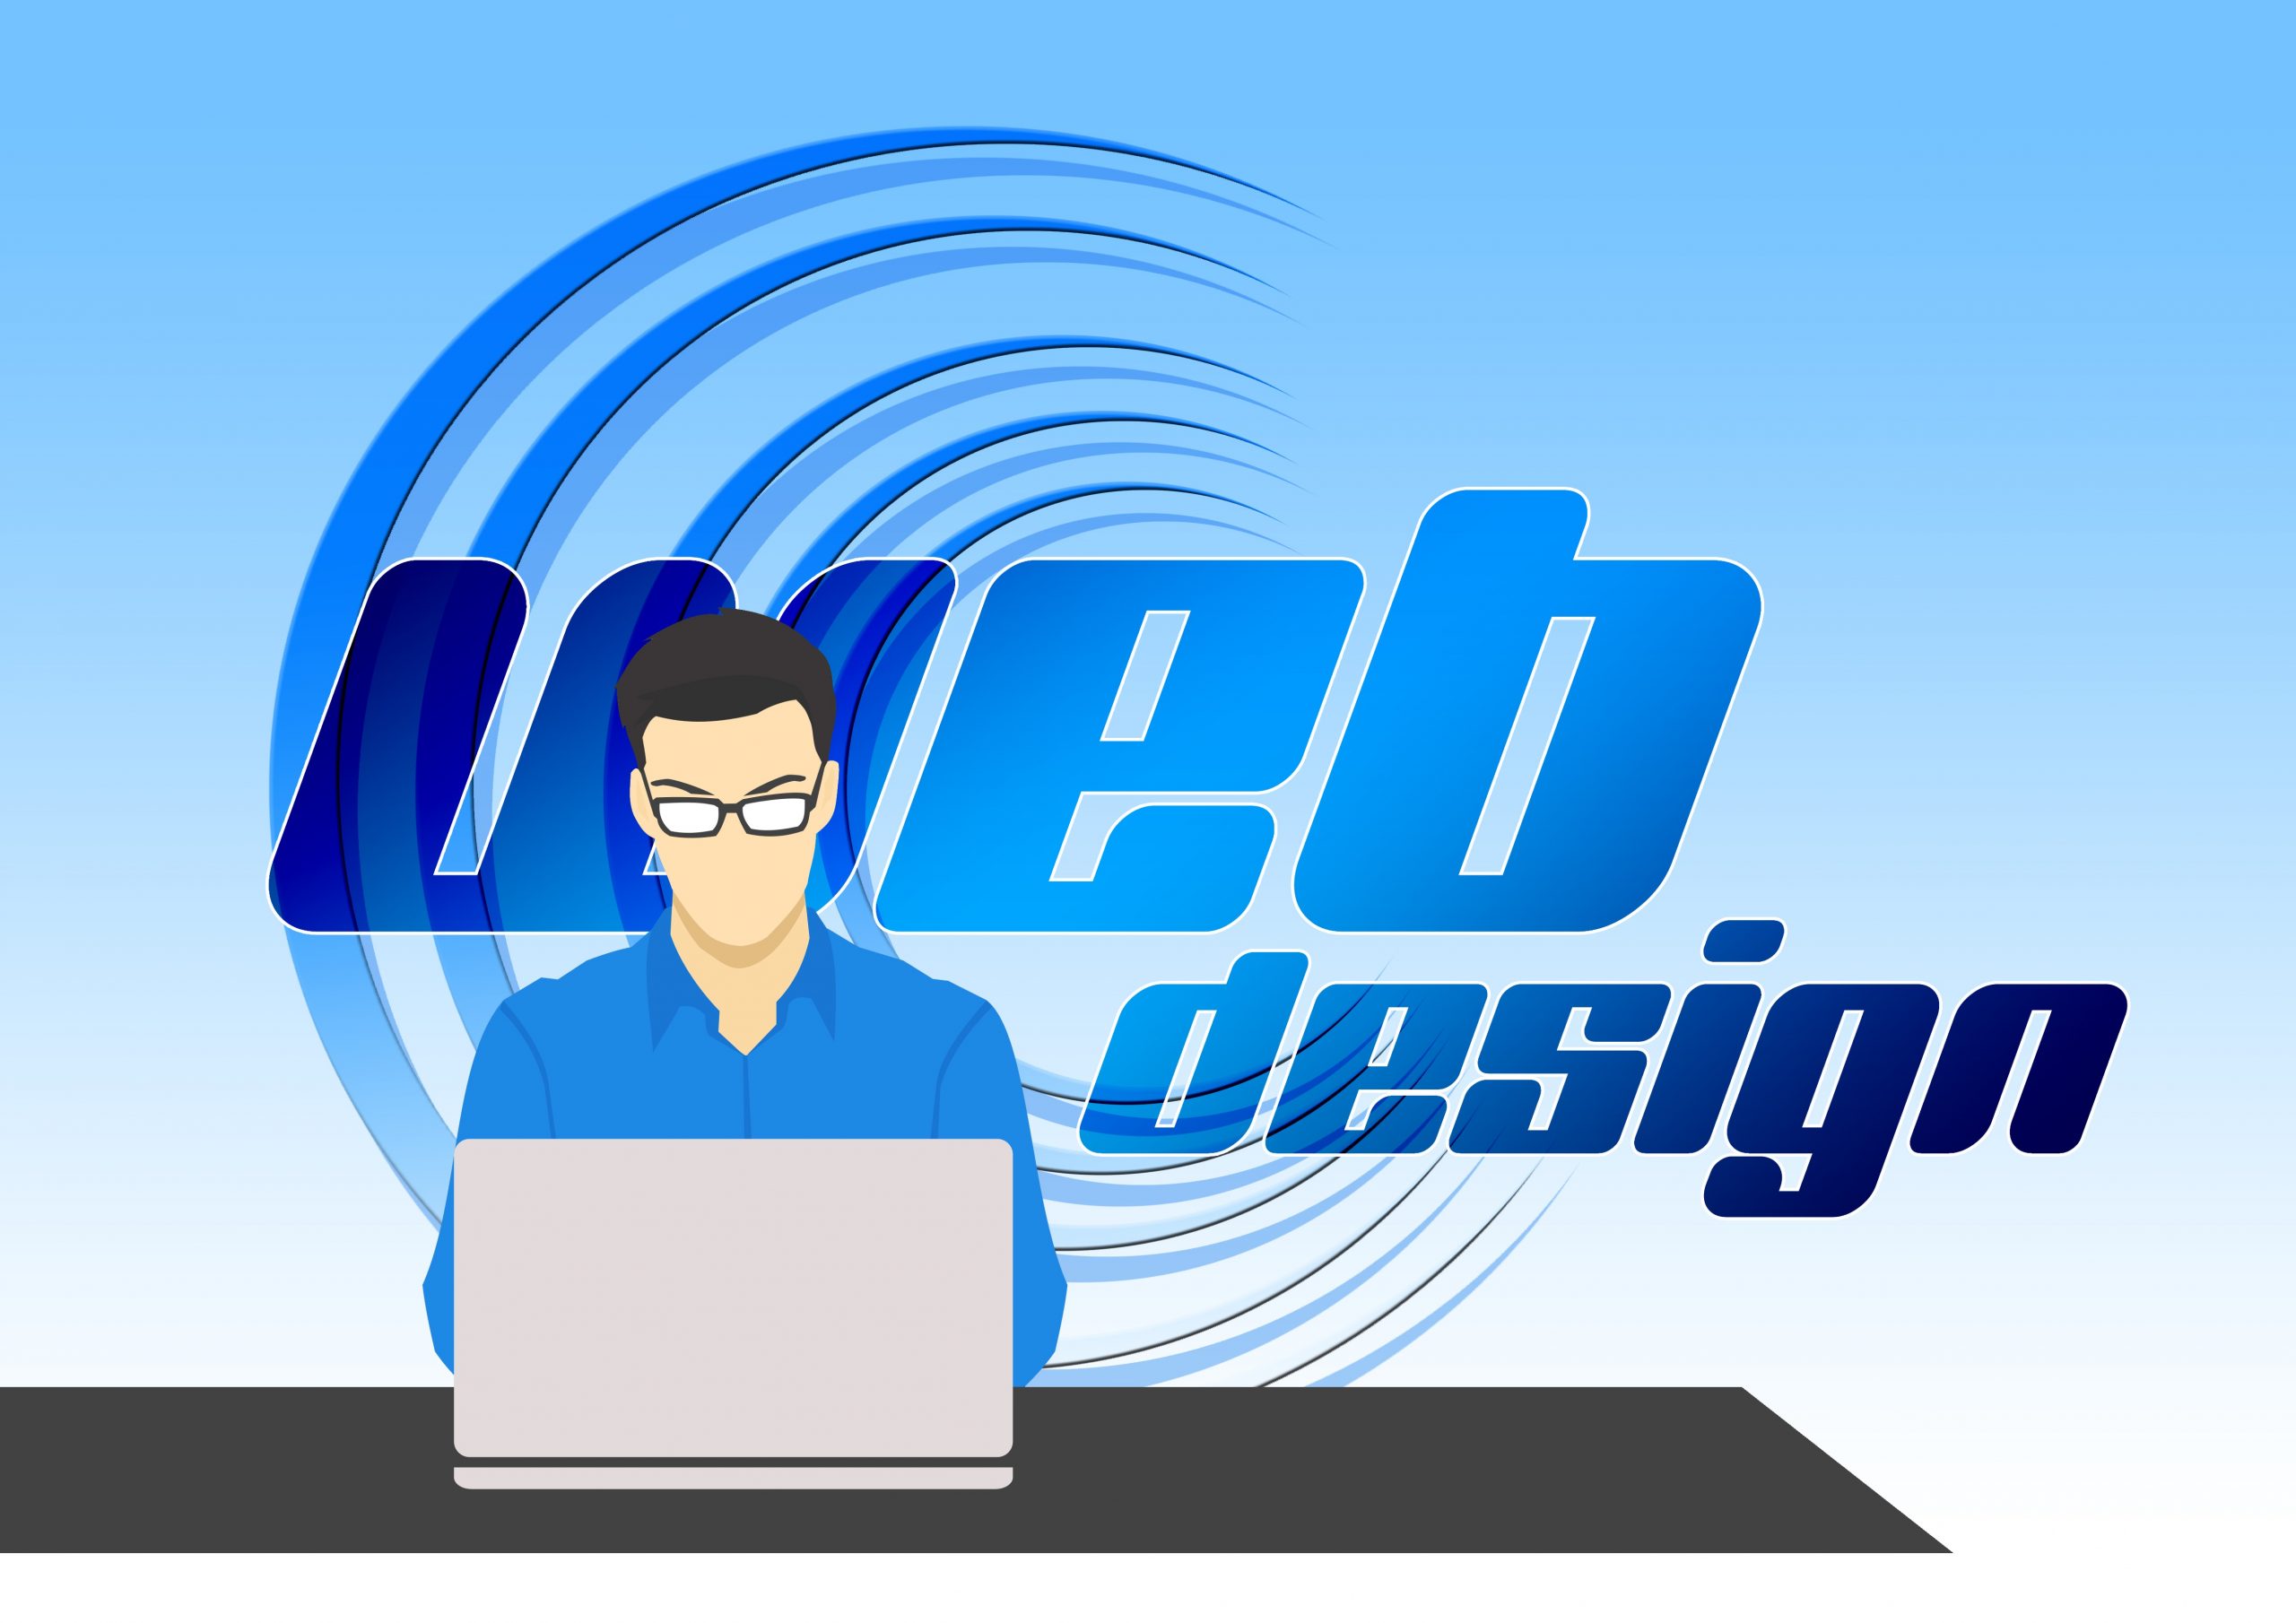 Web Development & Design